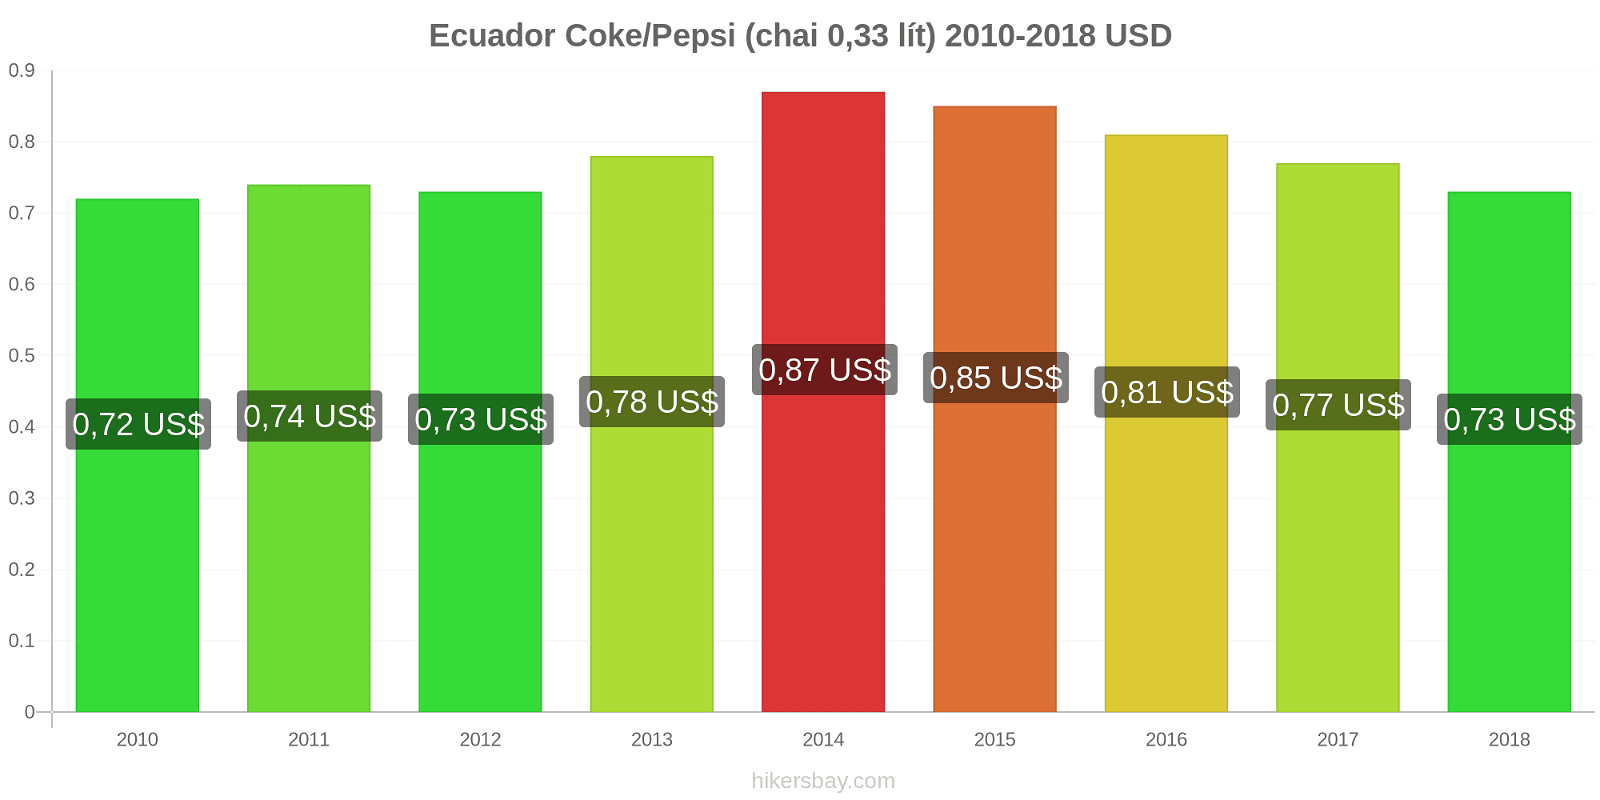 Ecuador thay đổi giá cả Coca-Cola/Pepsi (chai 0.33 lít) hikersbay.com